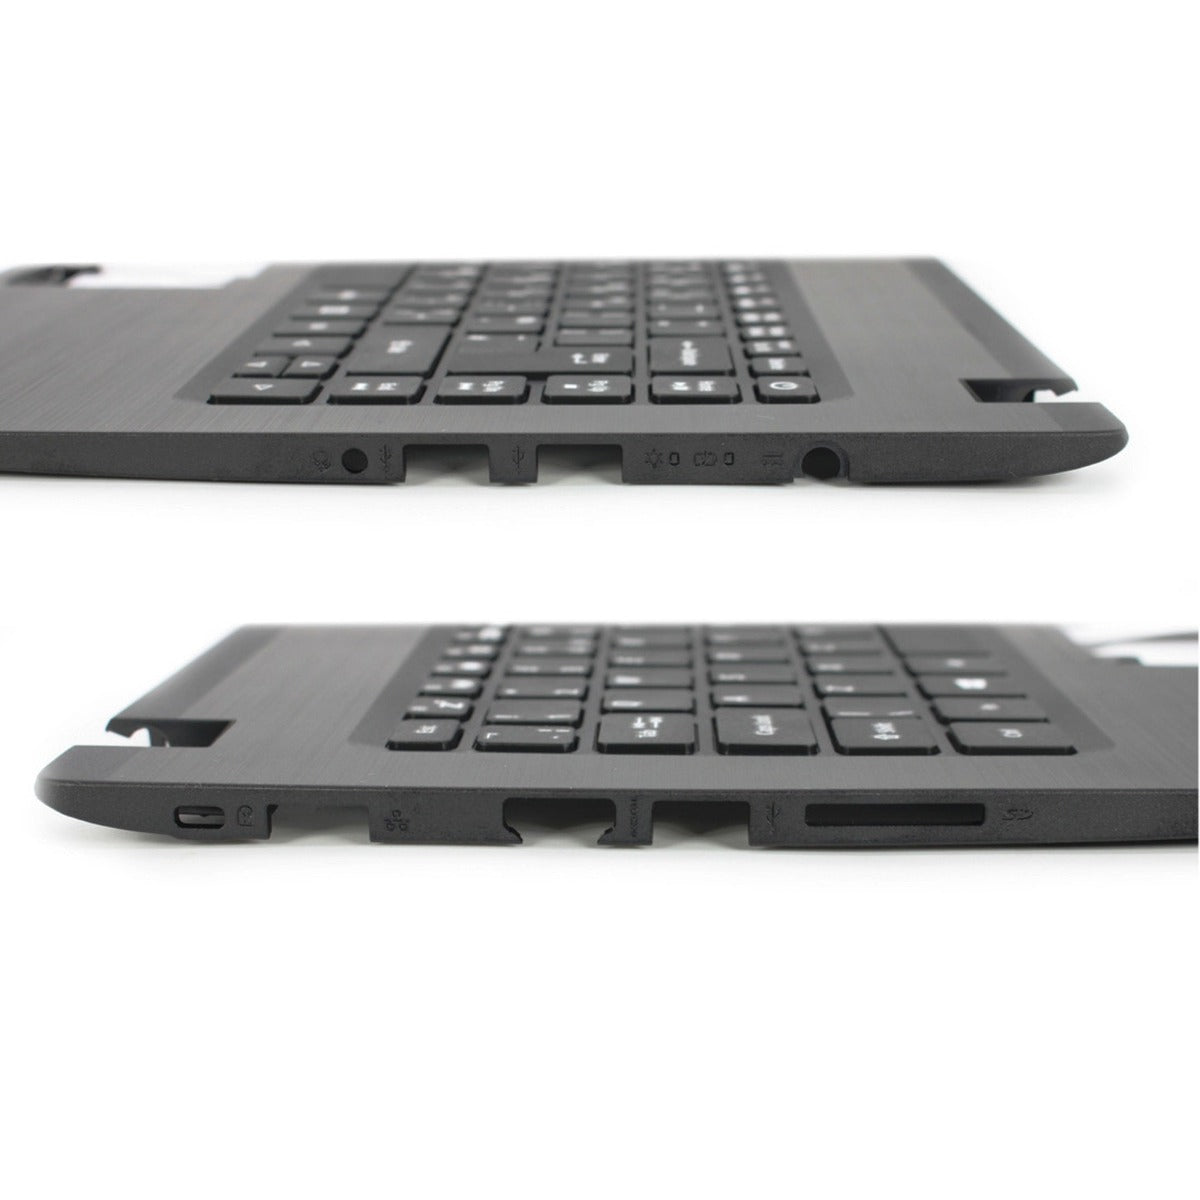 Acer Aspire A114-32 A314-21 A314-32 Palmrest Cover Keyboard UK 6B.GVYN7.029 Black